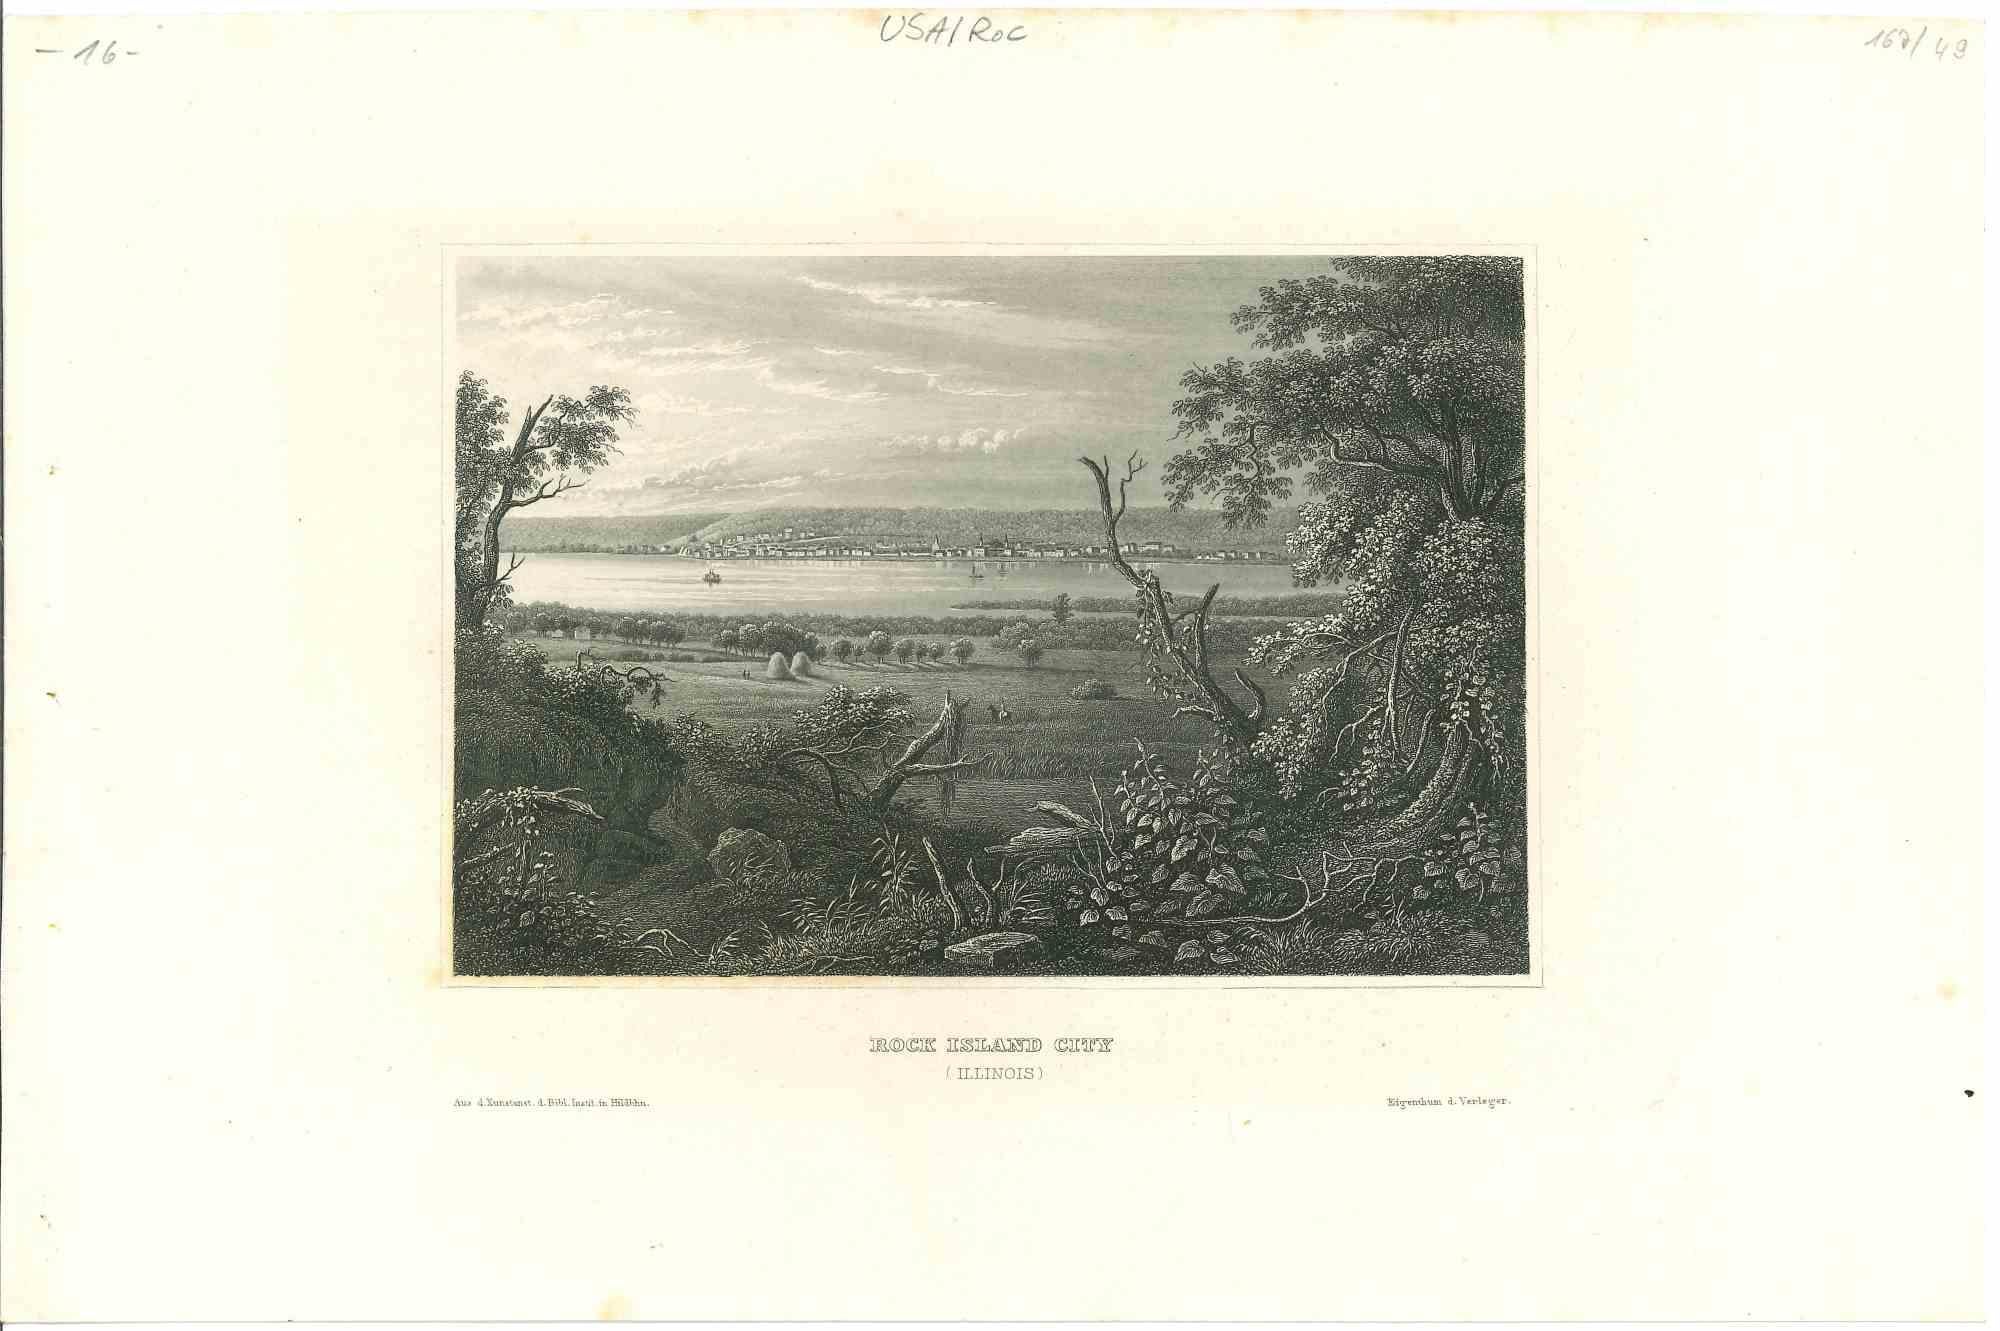 Unknown Landscape Print - Ancient View of Rock Island City - Original Lithograph - 1850